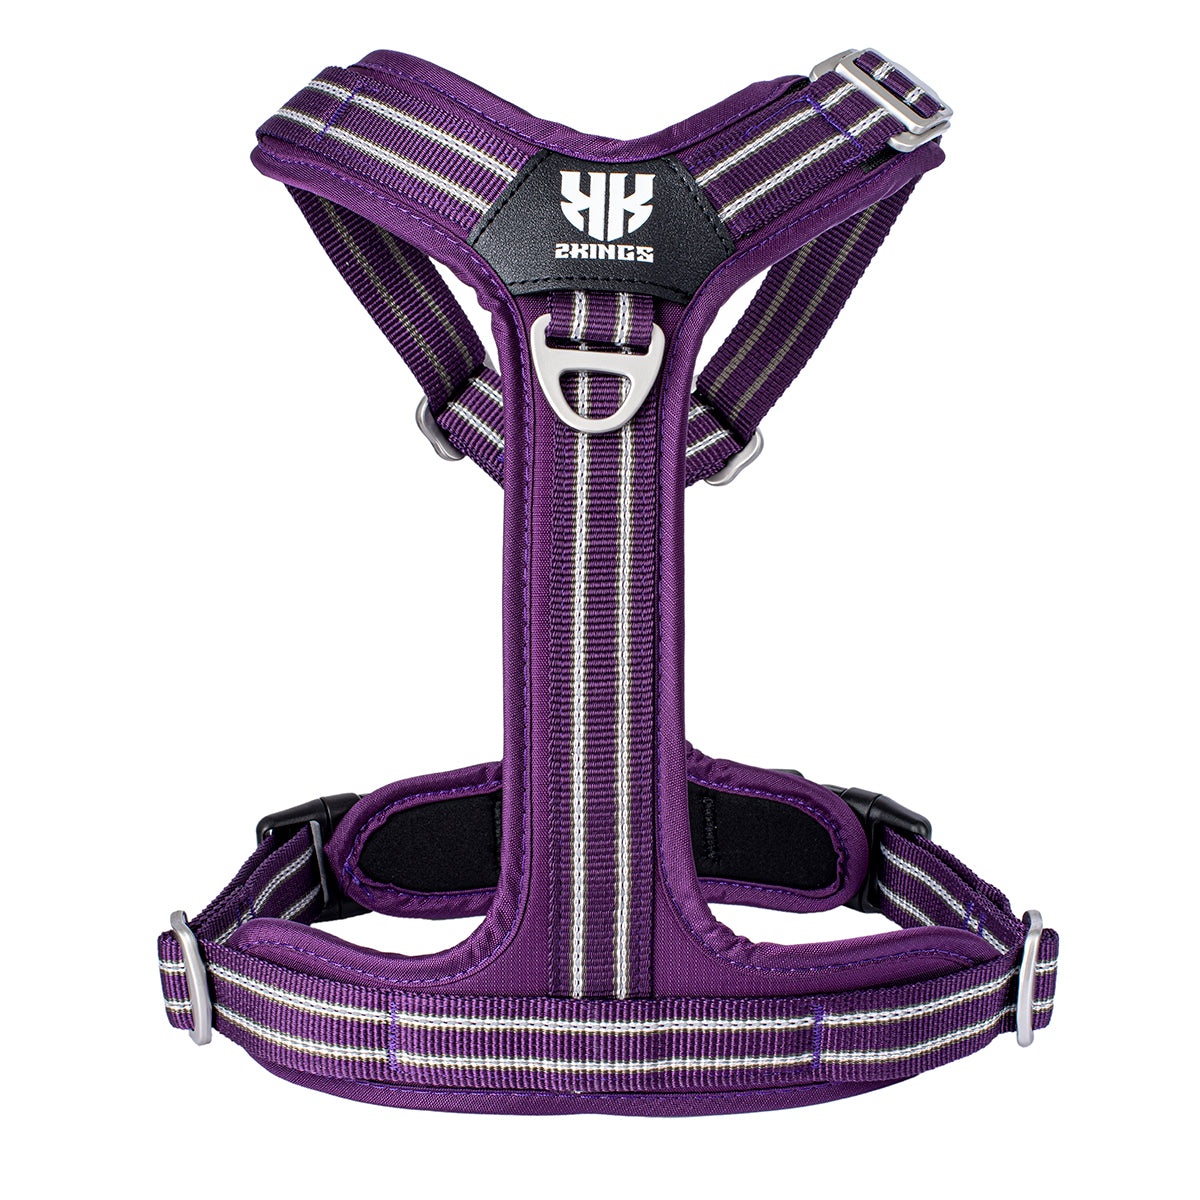 FlexiFit Reflective Dog Harness - Lightweight & Adjustable - Purple.